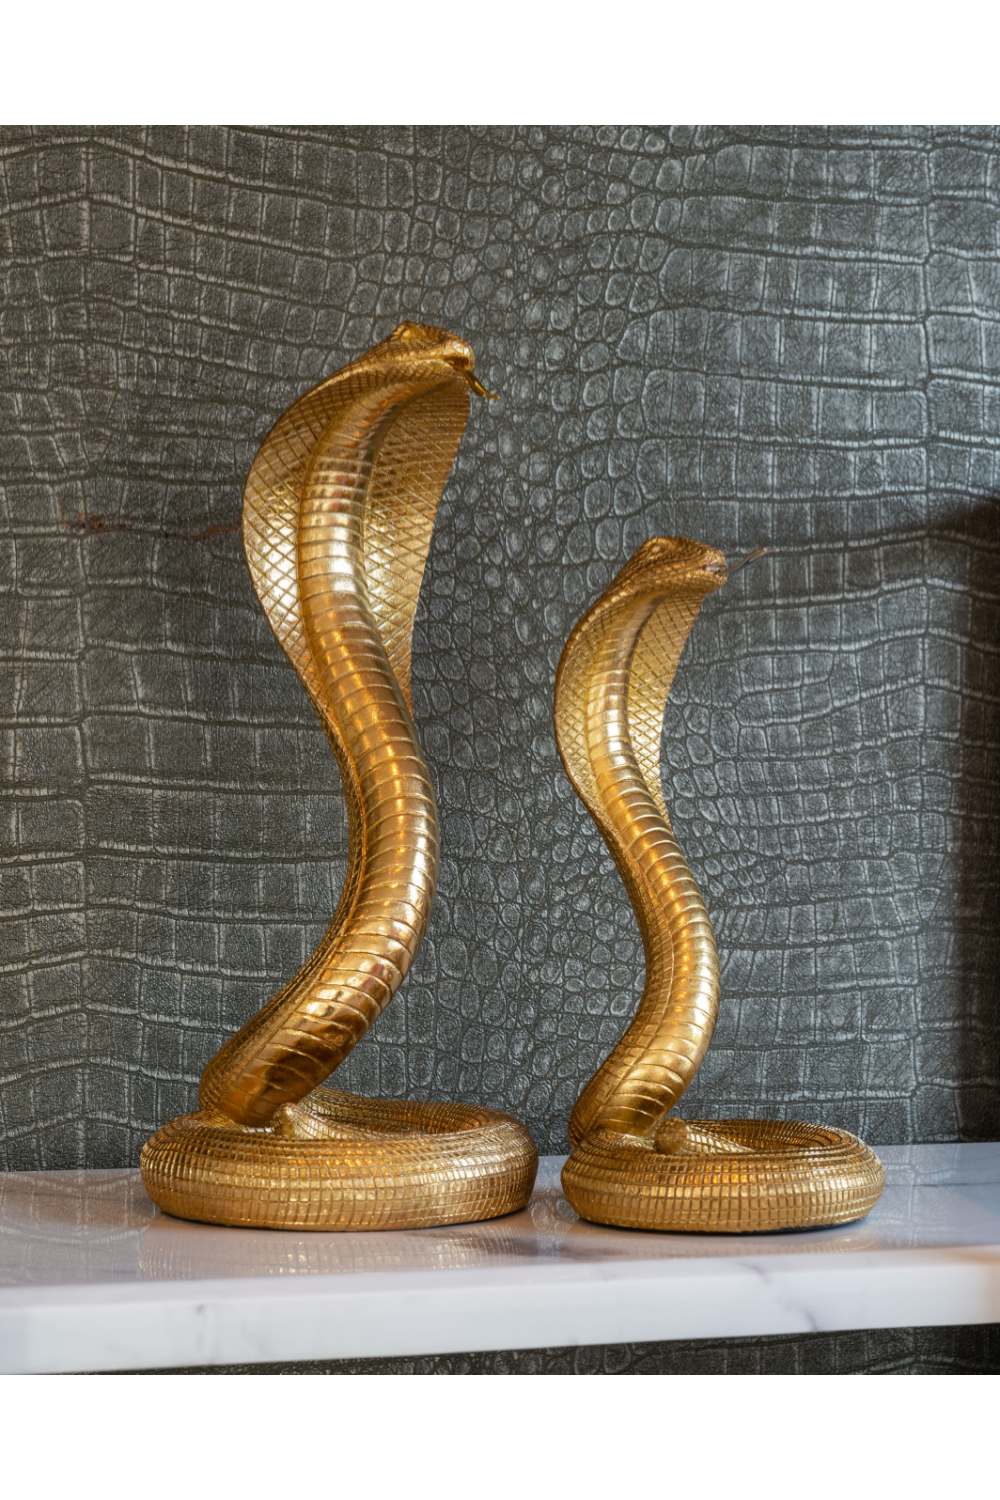 Gold Cobra Deco Object S | OROA Snake | OROA.com